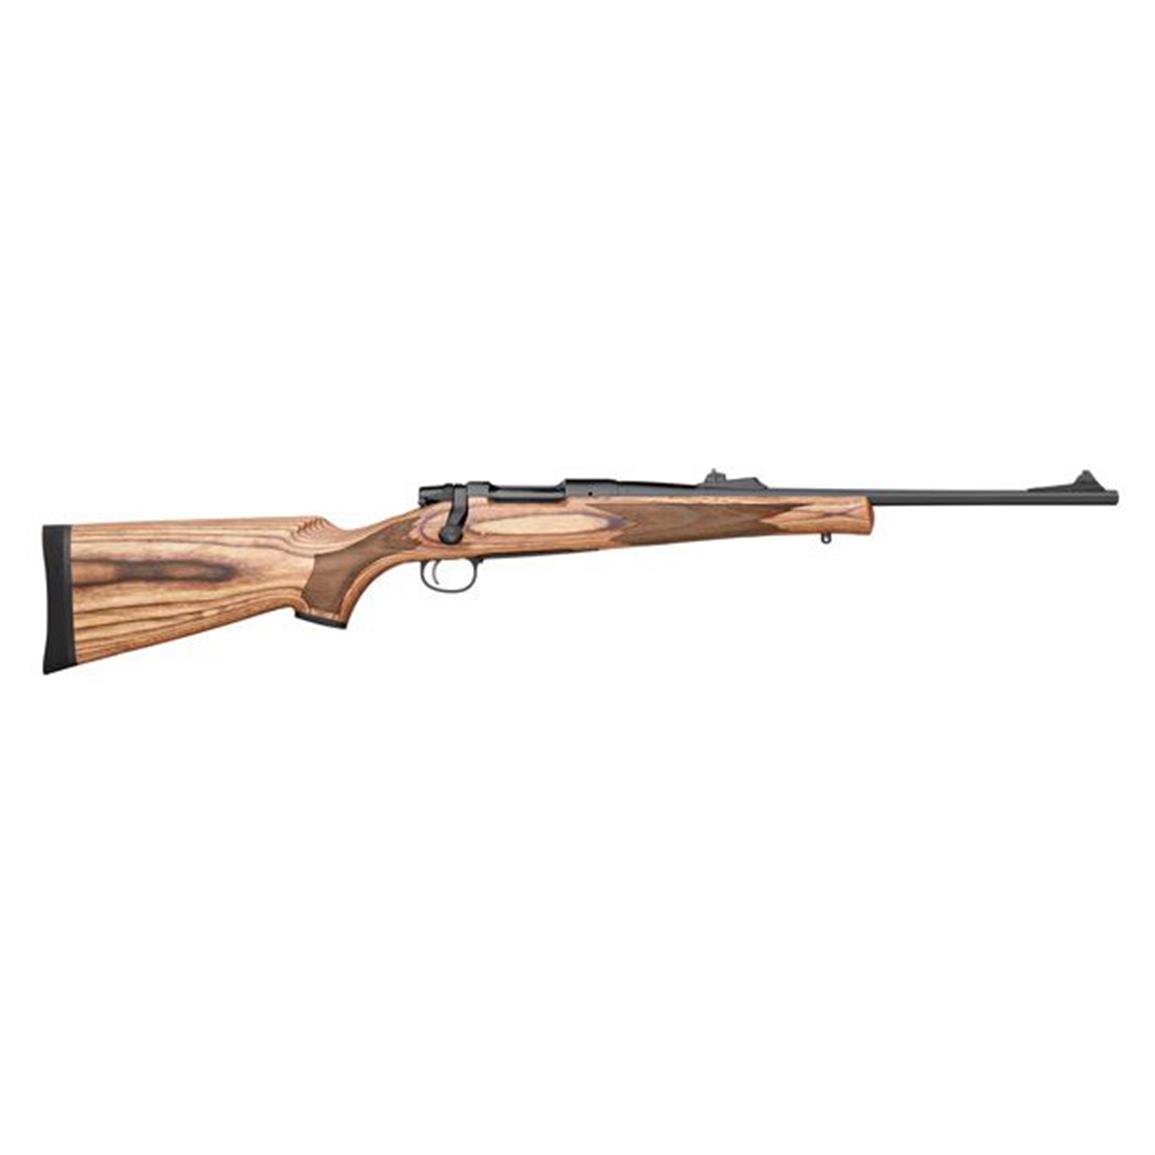 Remington 85963 Model Seven Bolt Action Rifle 308 WIN, RH, 18.5 in, Blue, Wood Stk, 4+1 Rnd, X-Mark Pro Trgr, 0540-1616